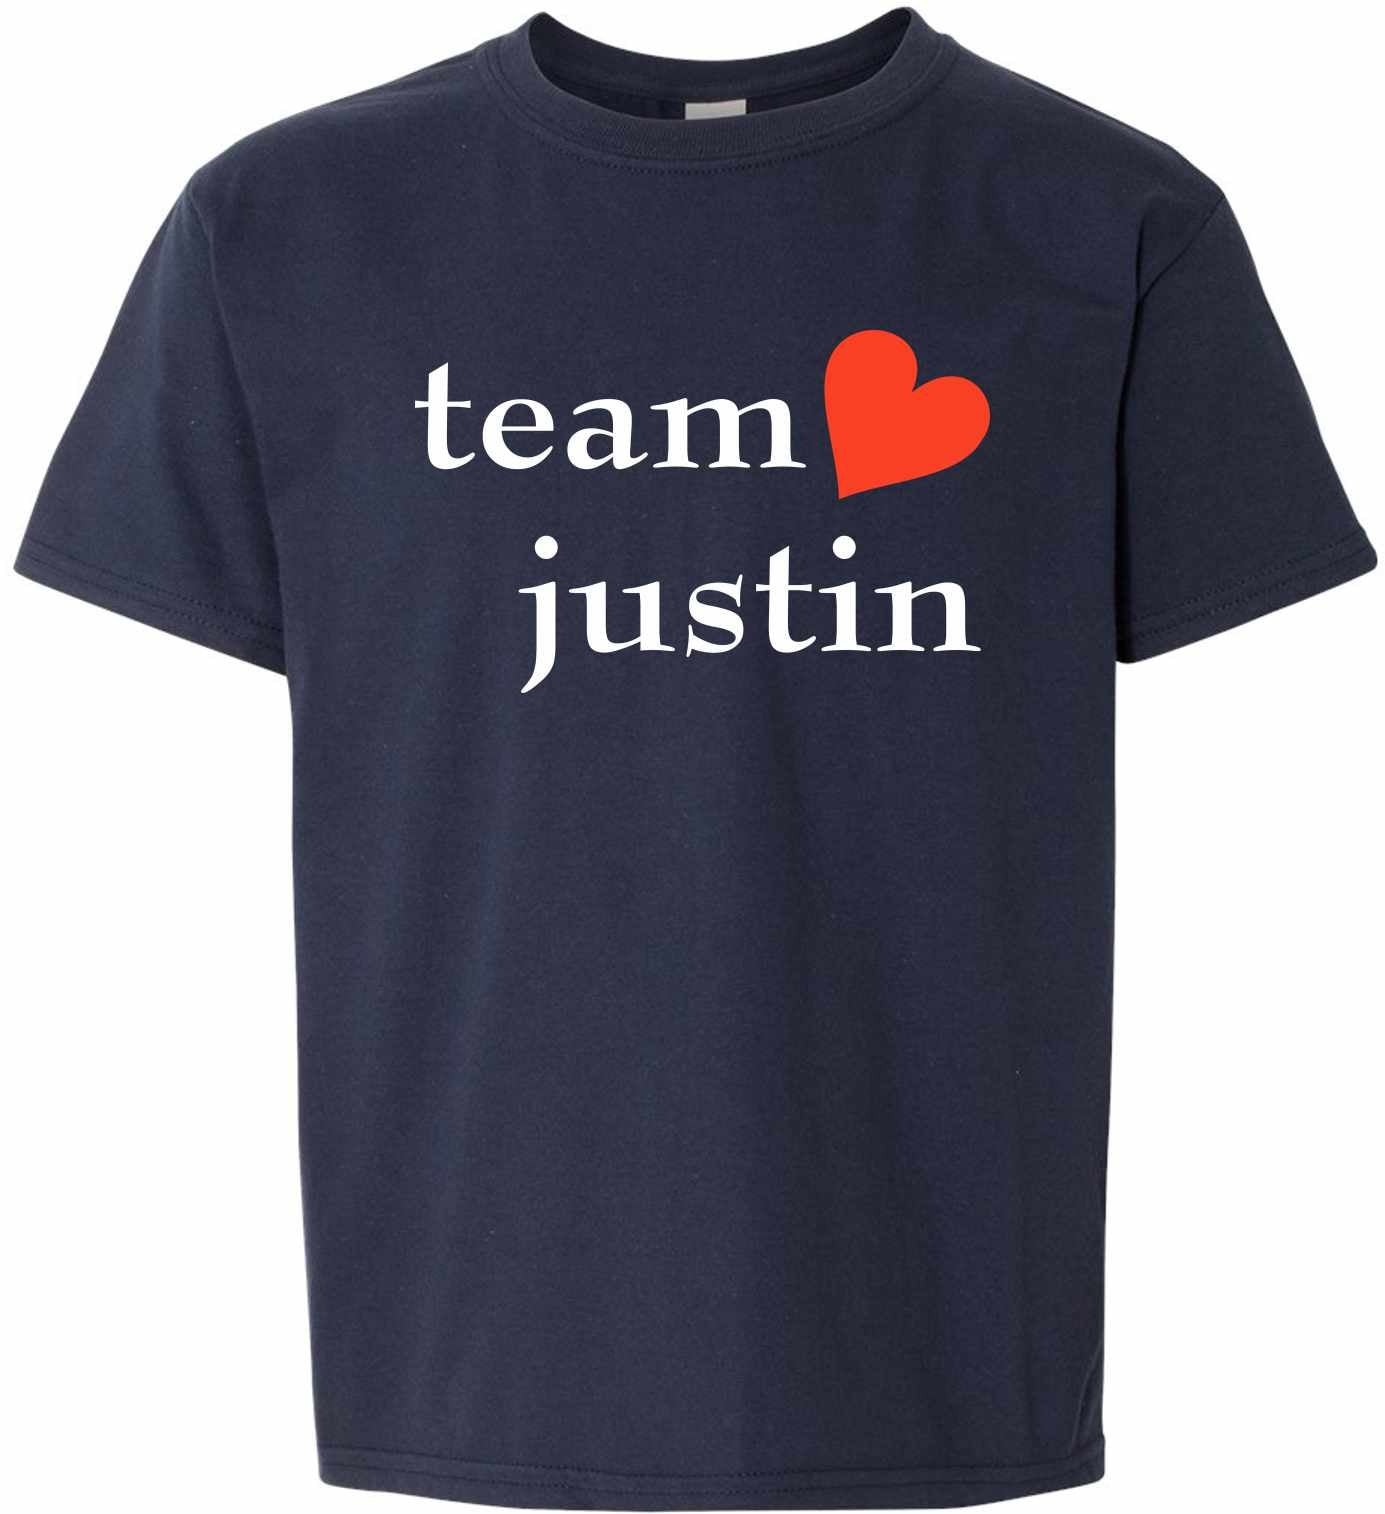 Team Justin on Kids T-Shirt (#636-201)